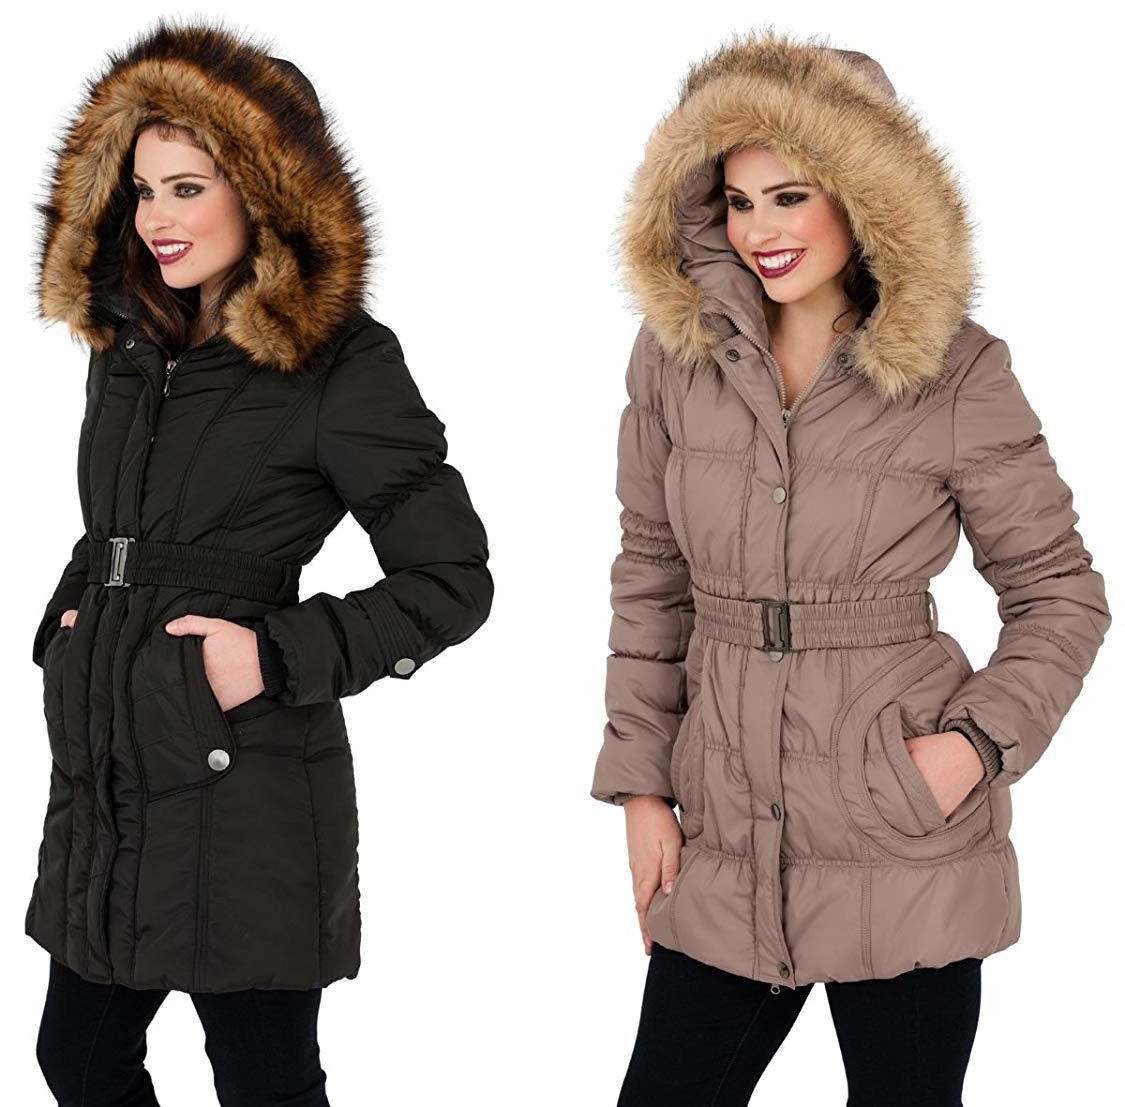 Black Winter Coat With Fur Hood Style